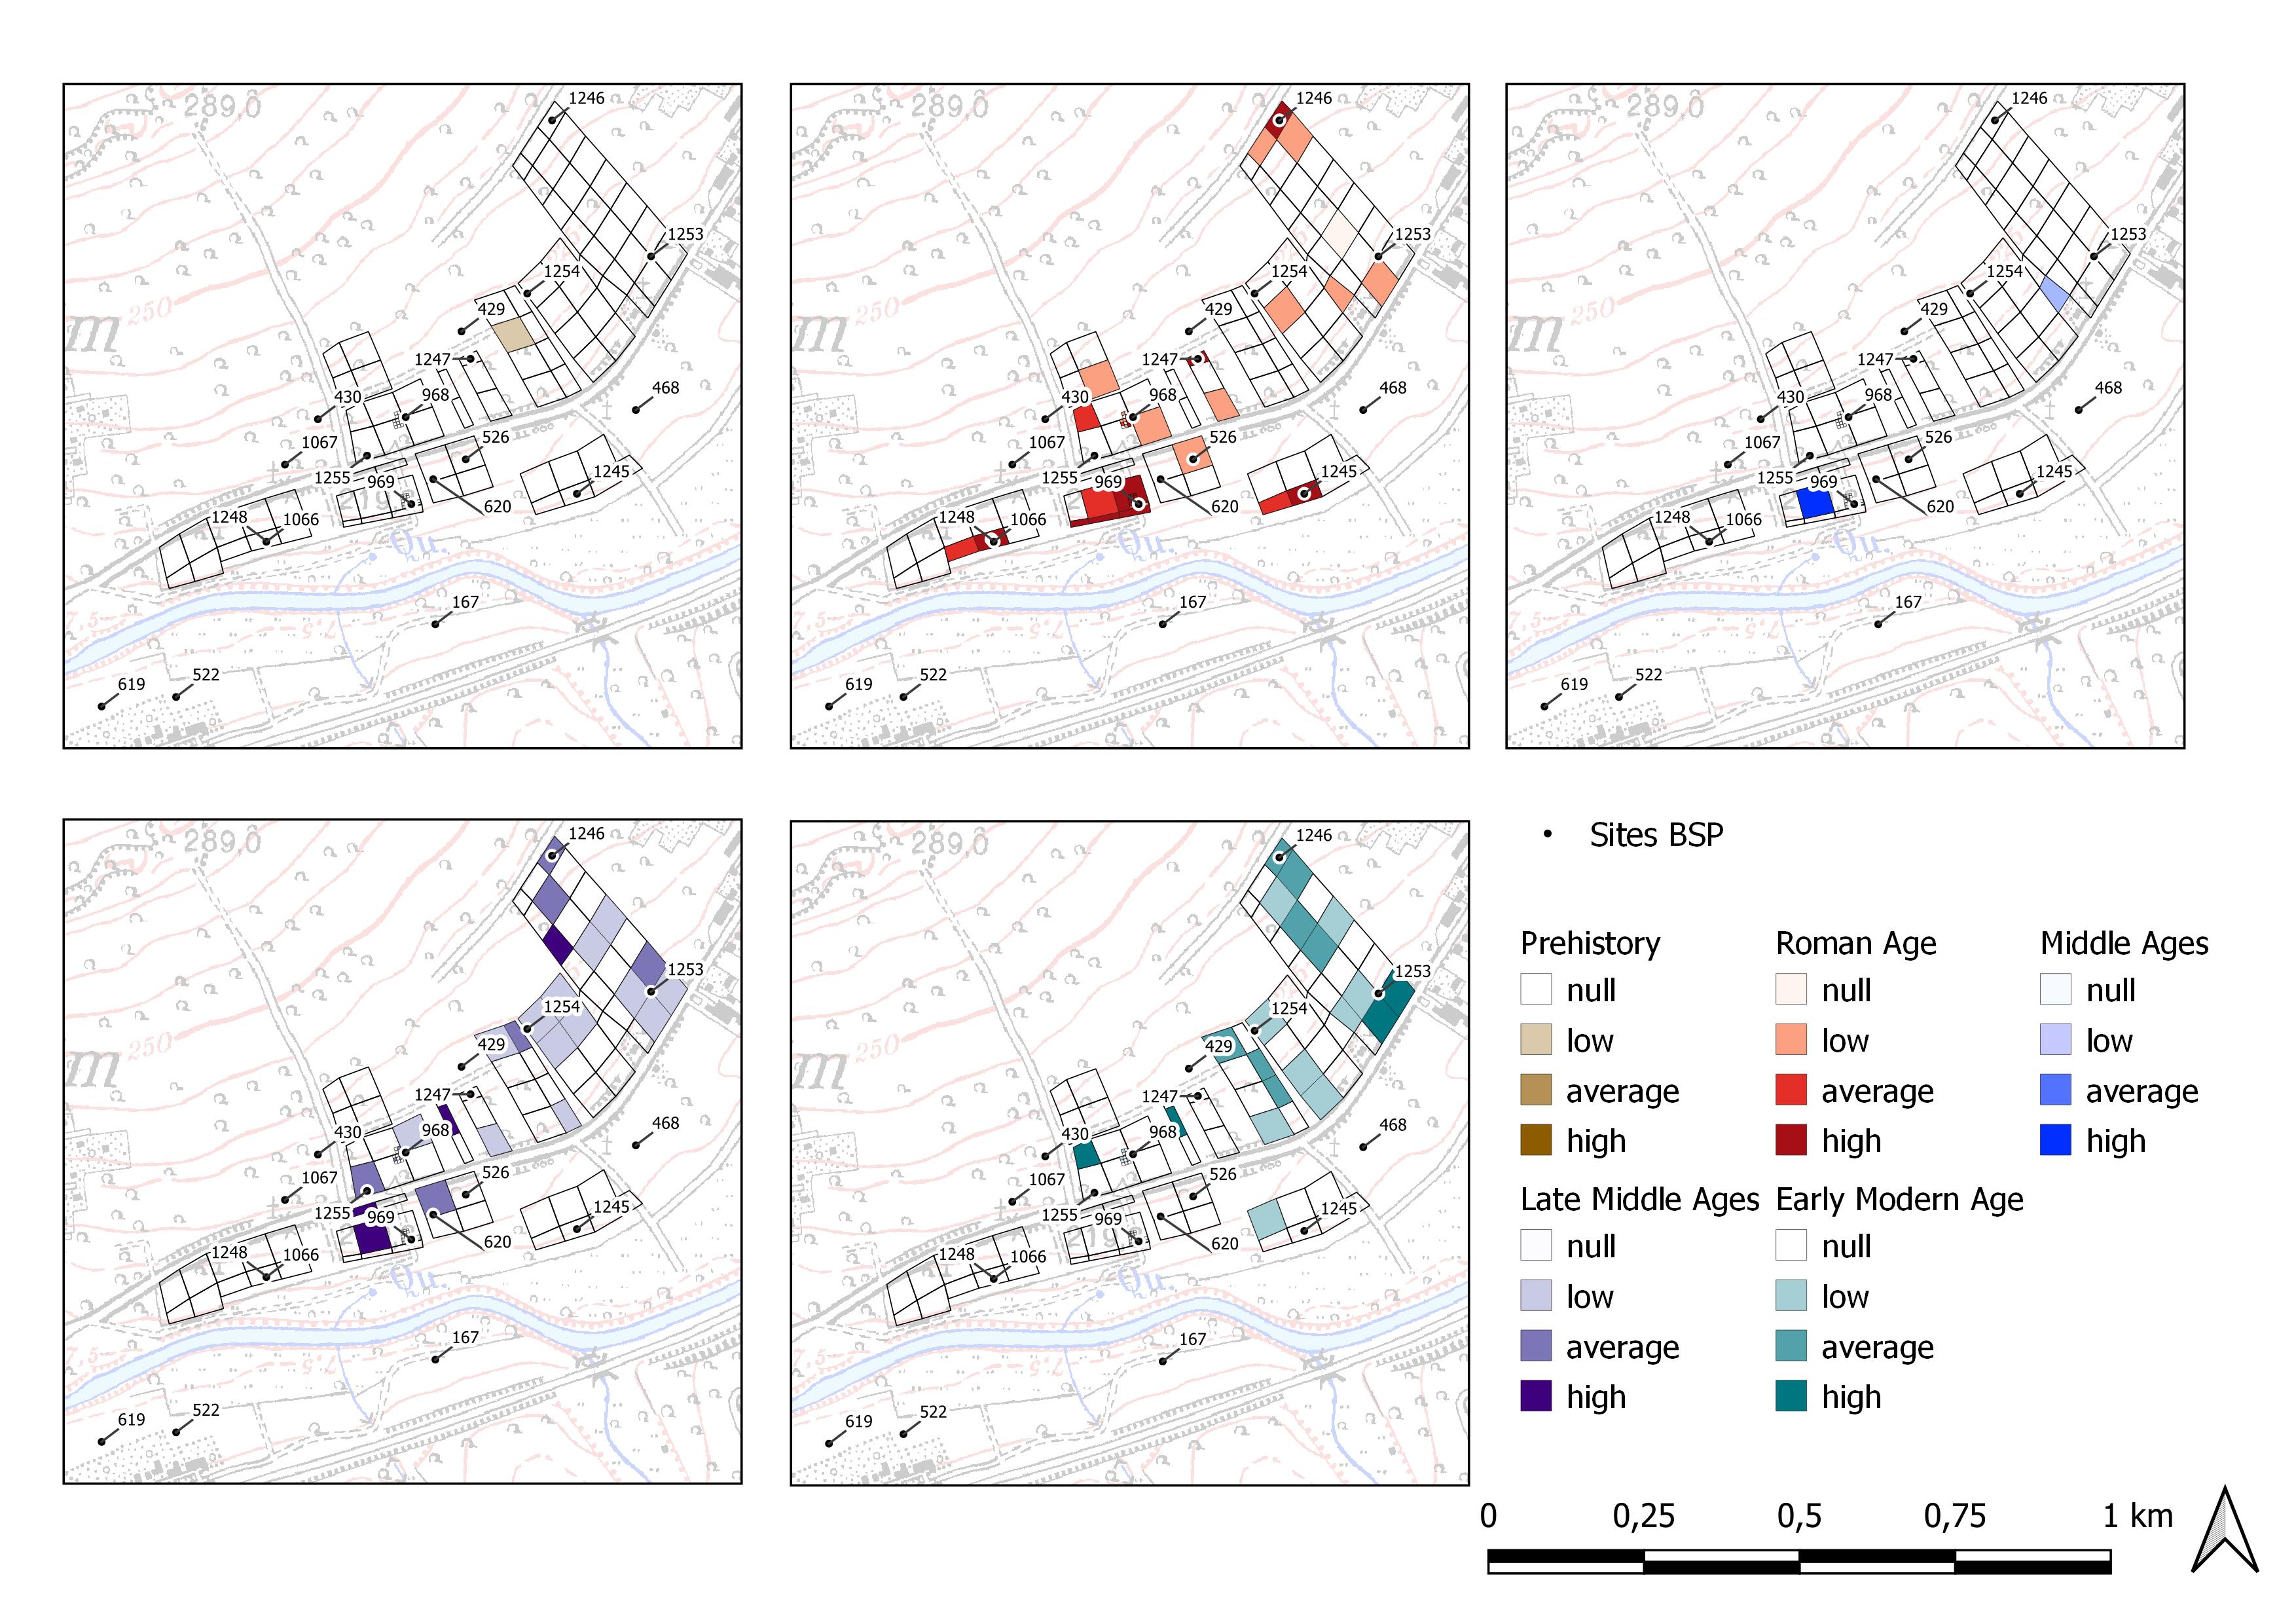  Figure 7. Reinheim, Horres. Prospection survey data density by chronology. 